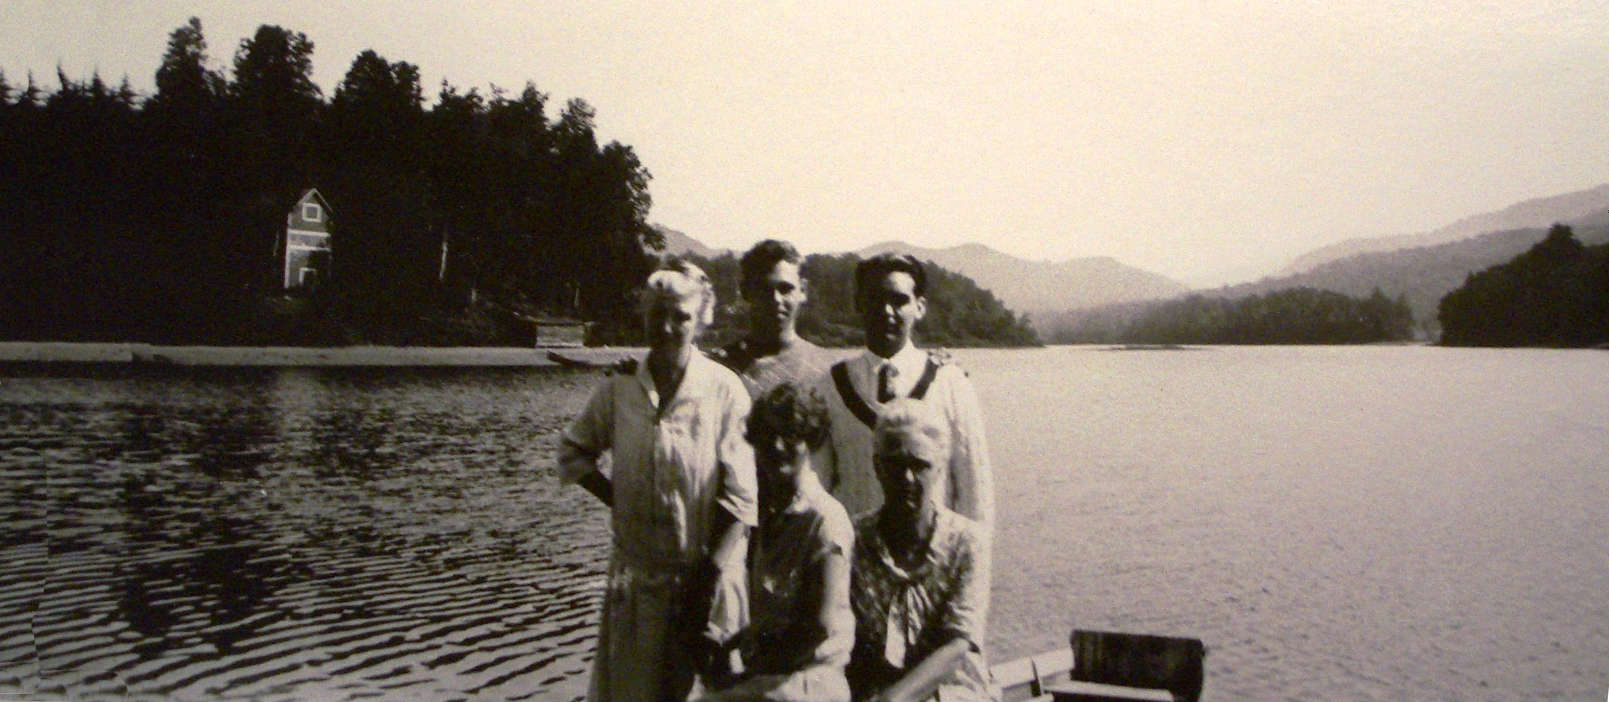 Federico García Lorca with the Cummings family at Lake Eden